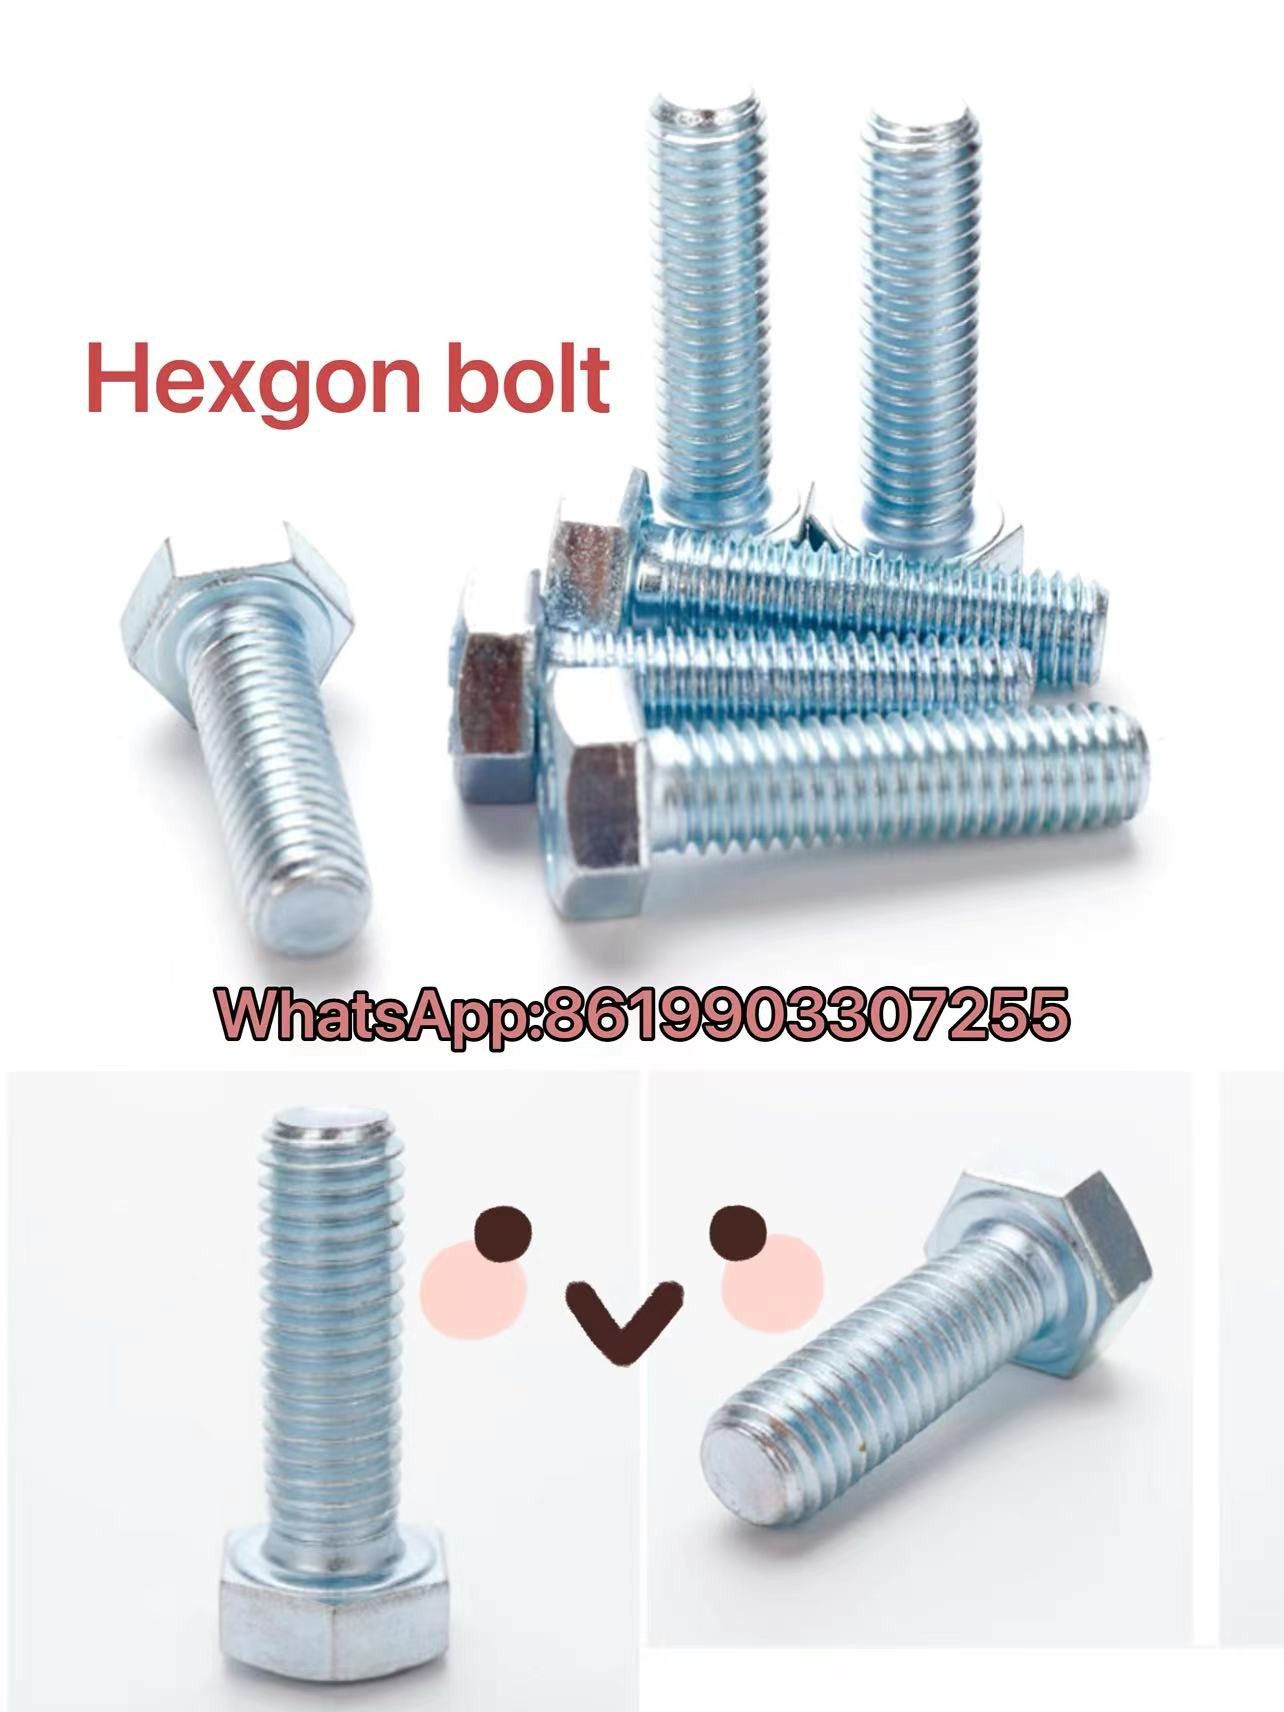 hexgon bolt fastener factory support costomization Whatsapp 8619903307255